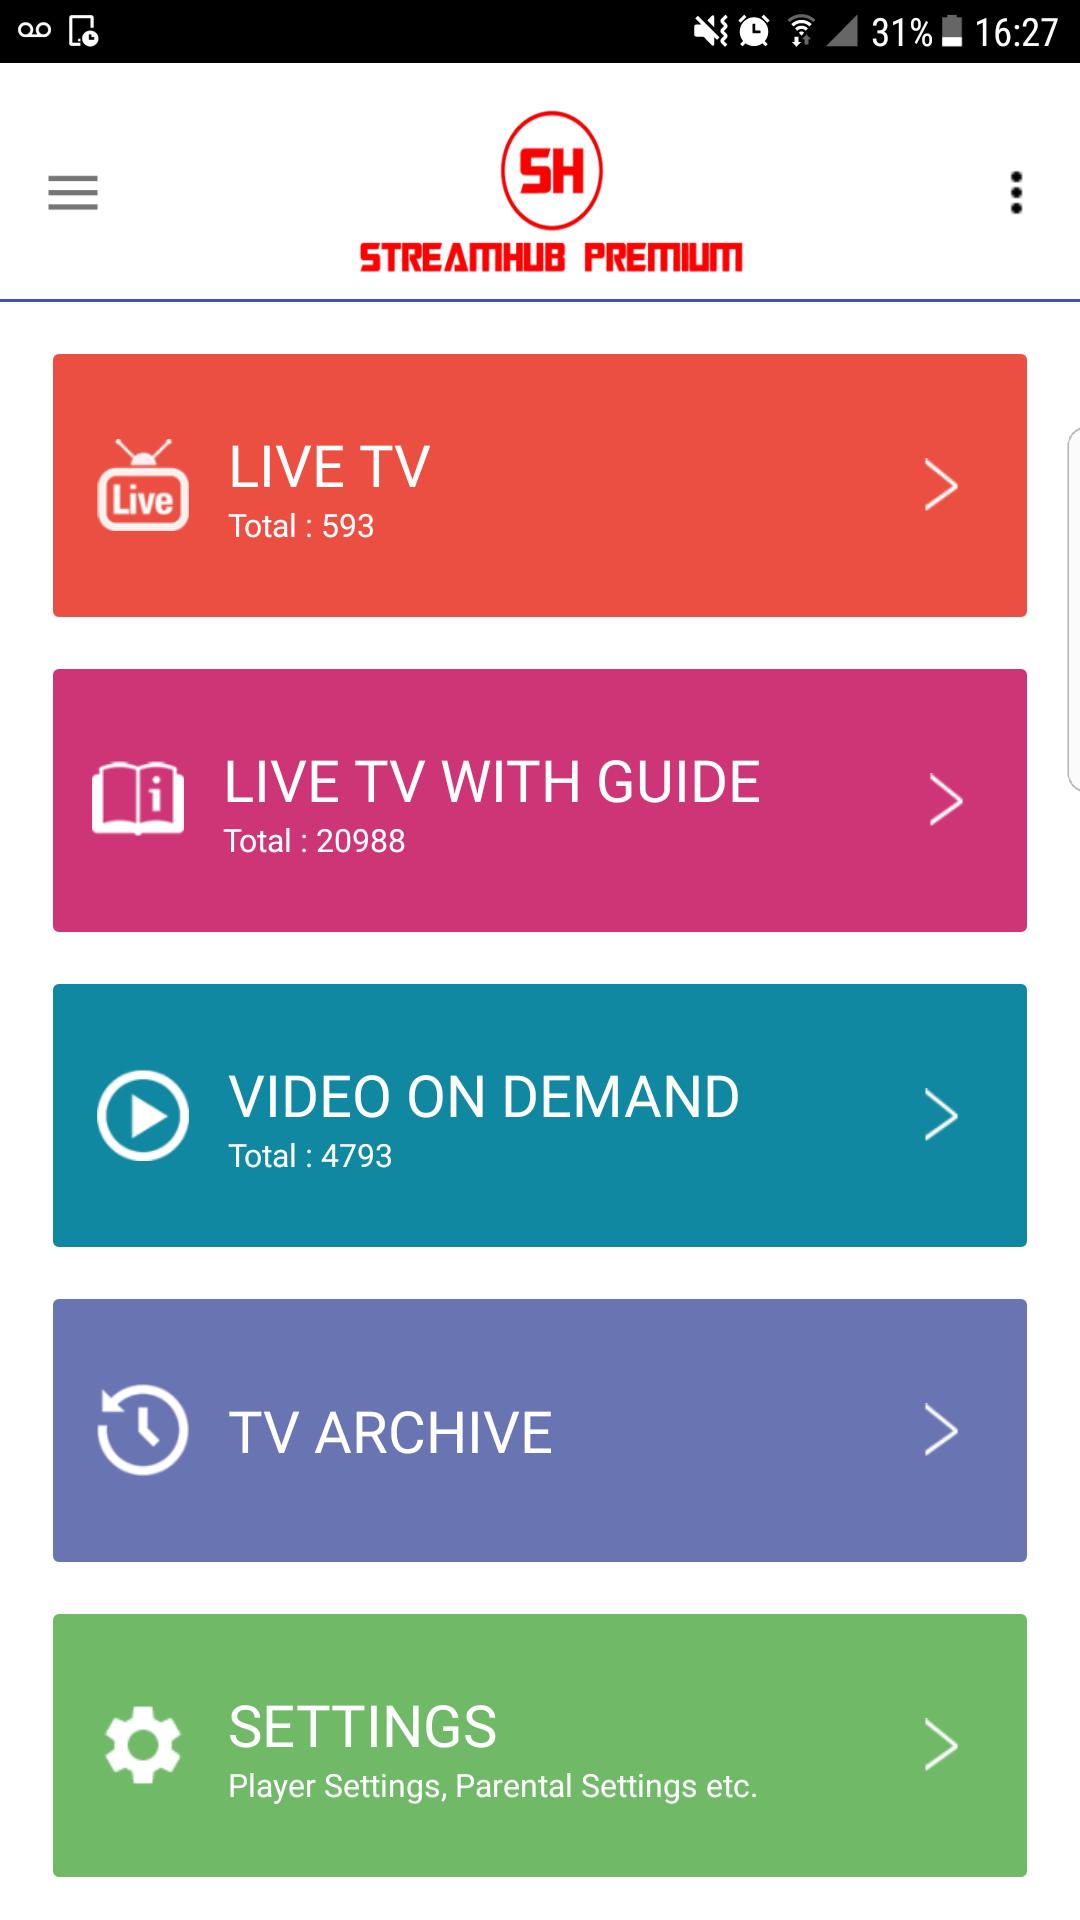 StreamHub Premium Basic for Android - APK Download